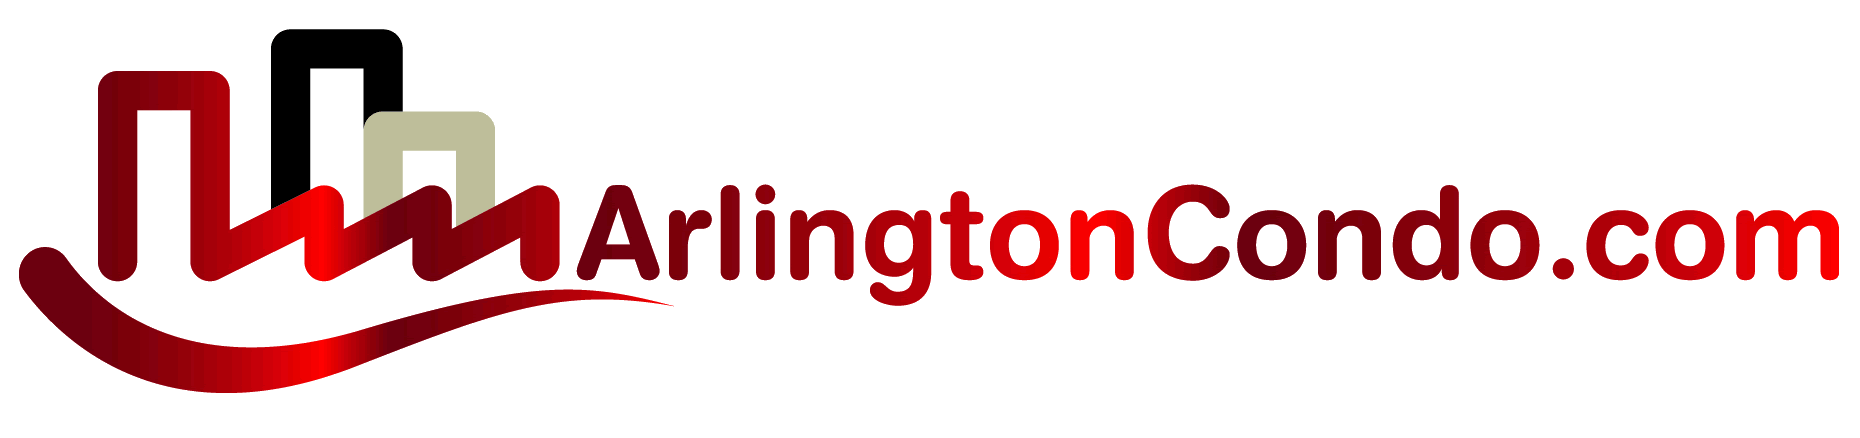 Arlington_Condo_Logo.png